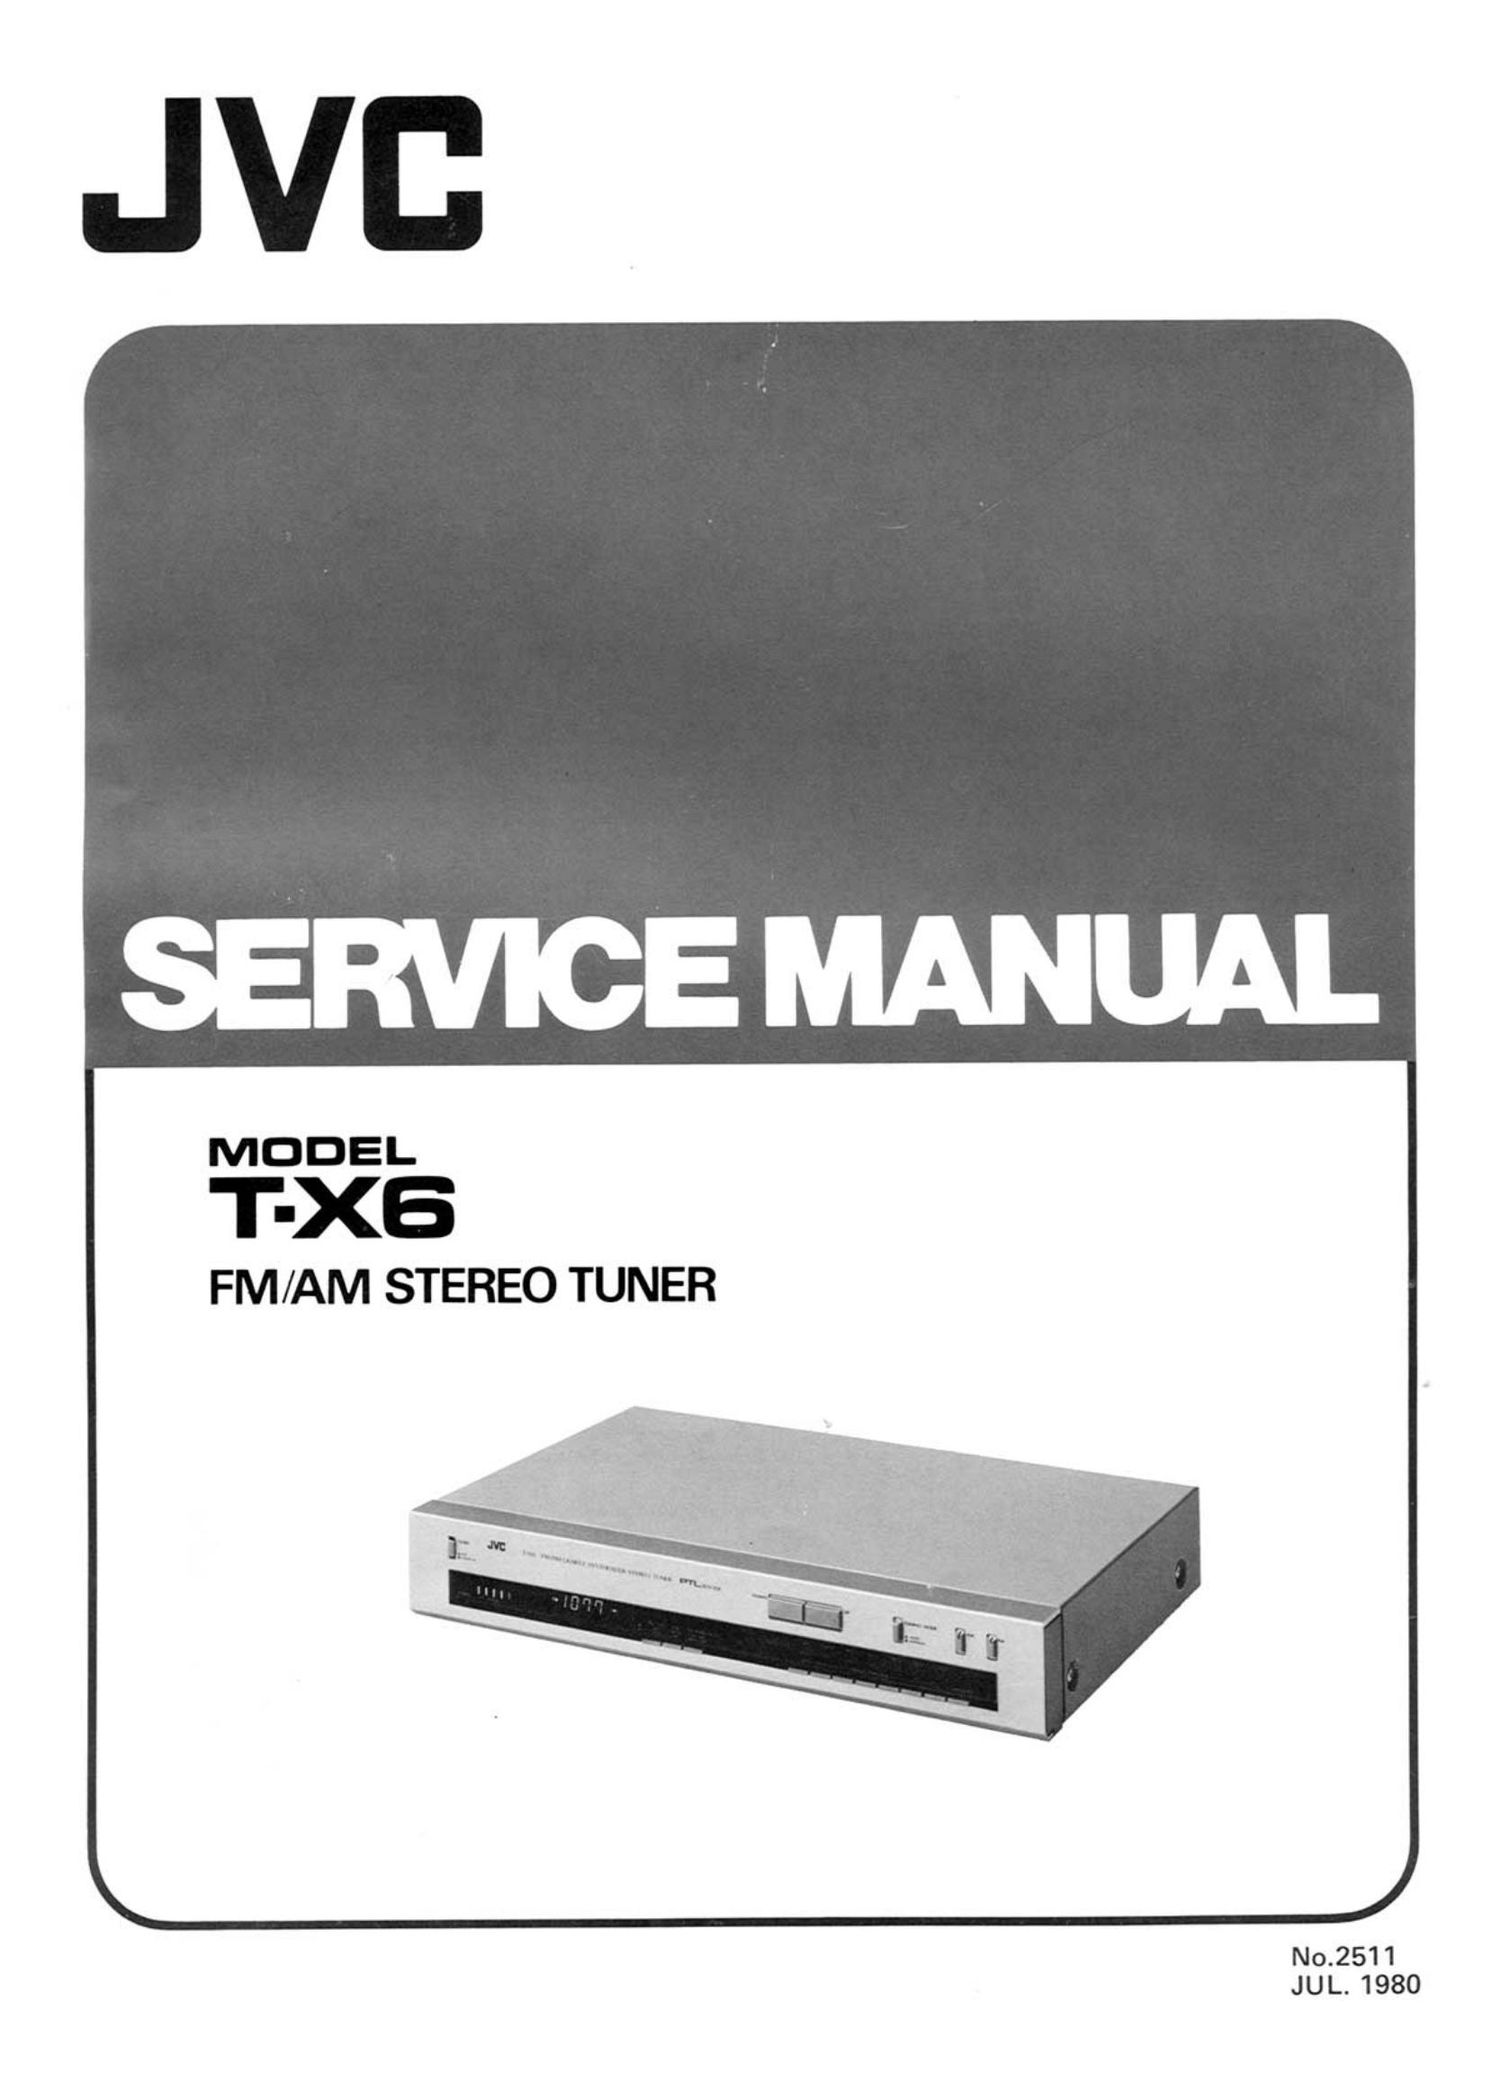 Jvc TX 6 Service Manual